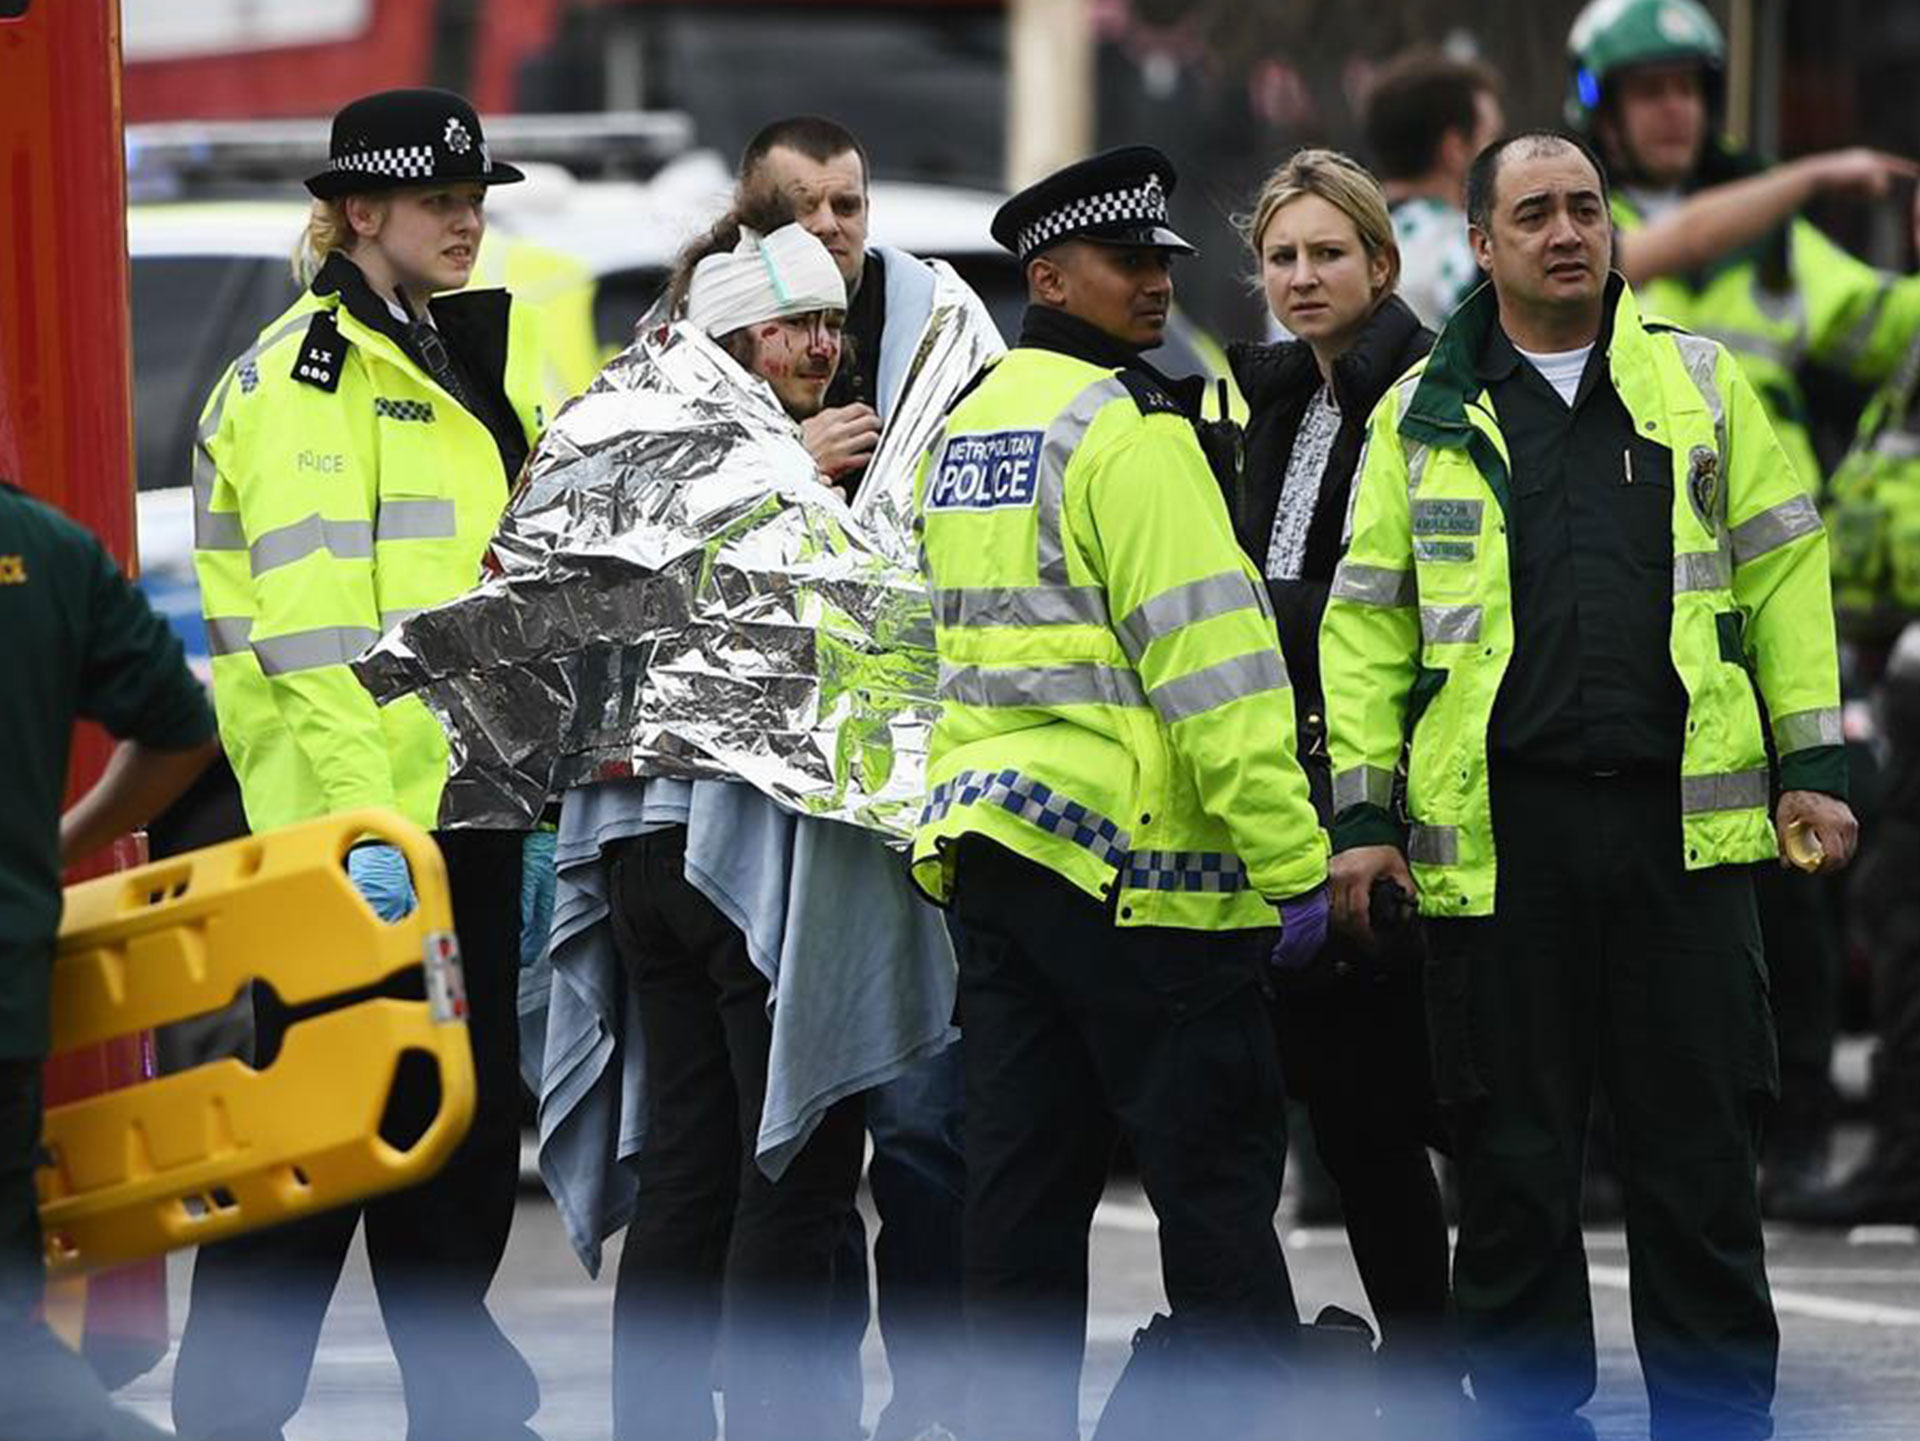 Terrorist behind London attacks had been investigated by MI5